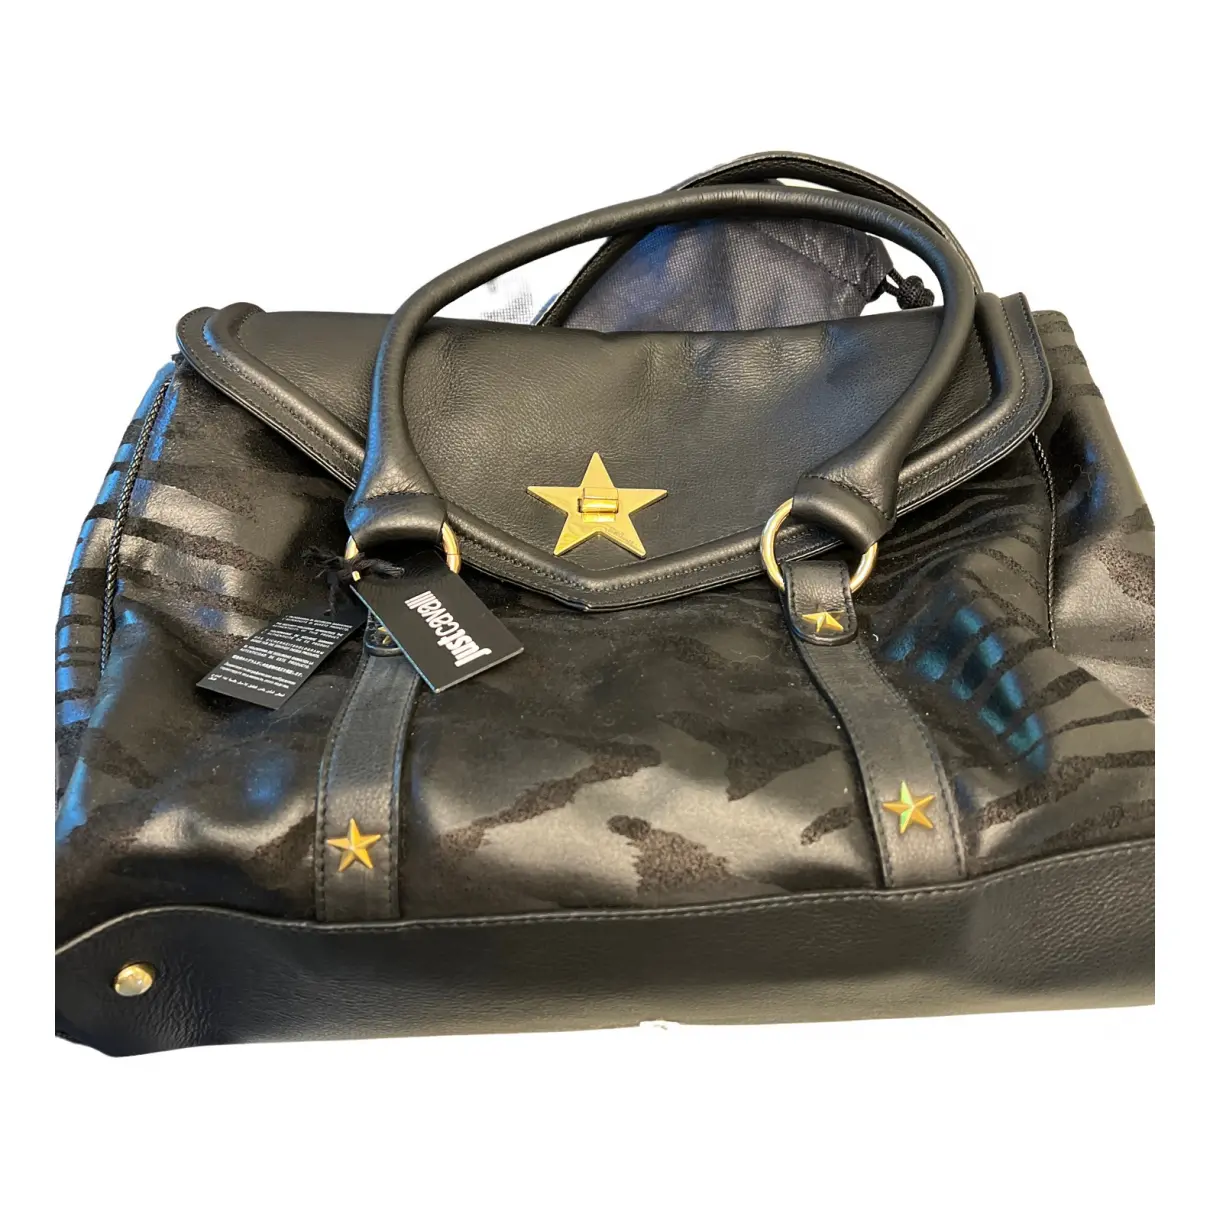 Buy Just Cavalli Leather handbag online